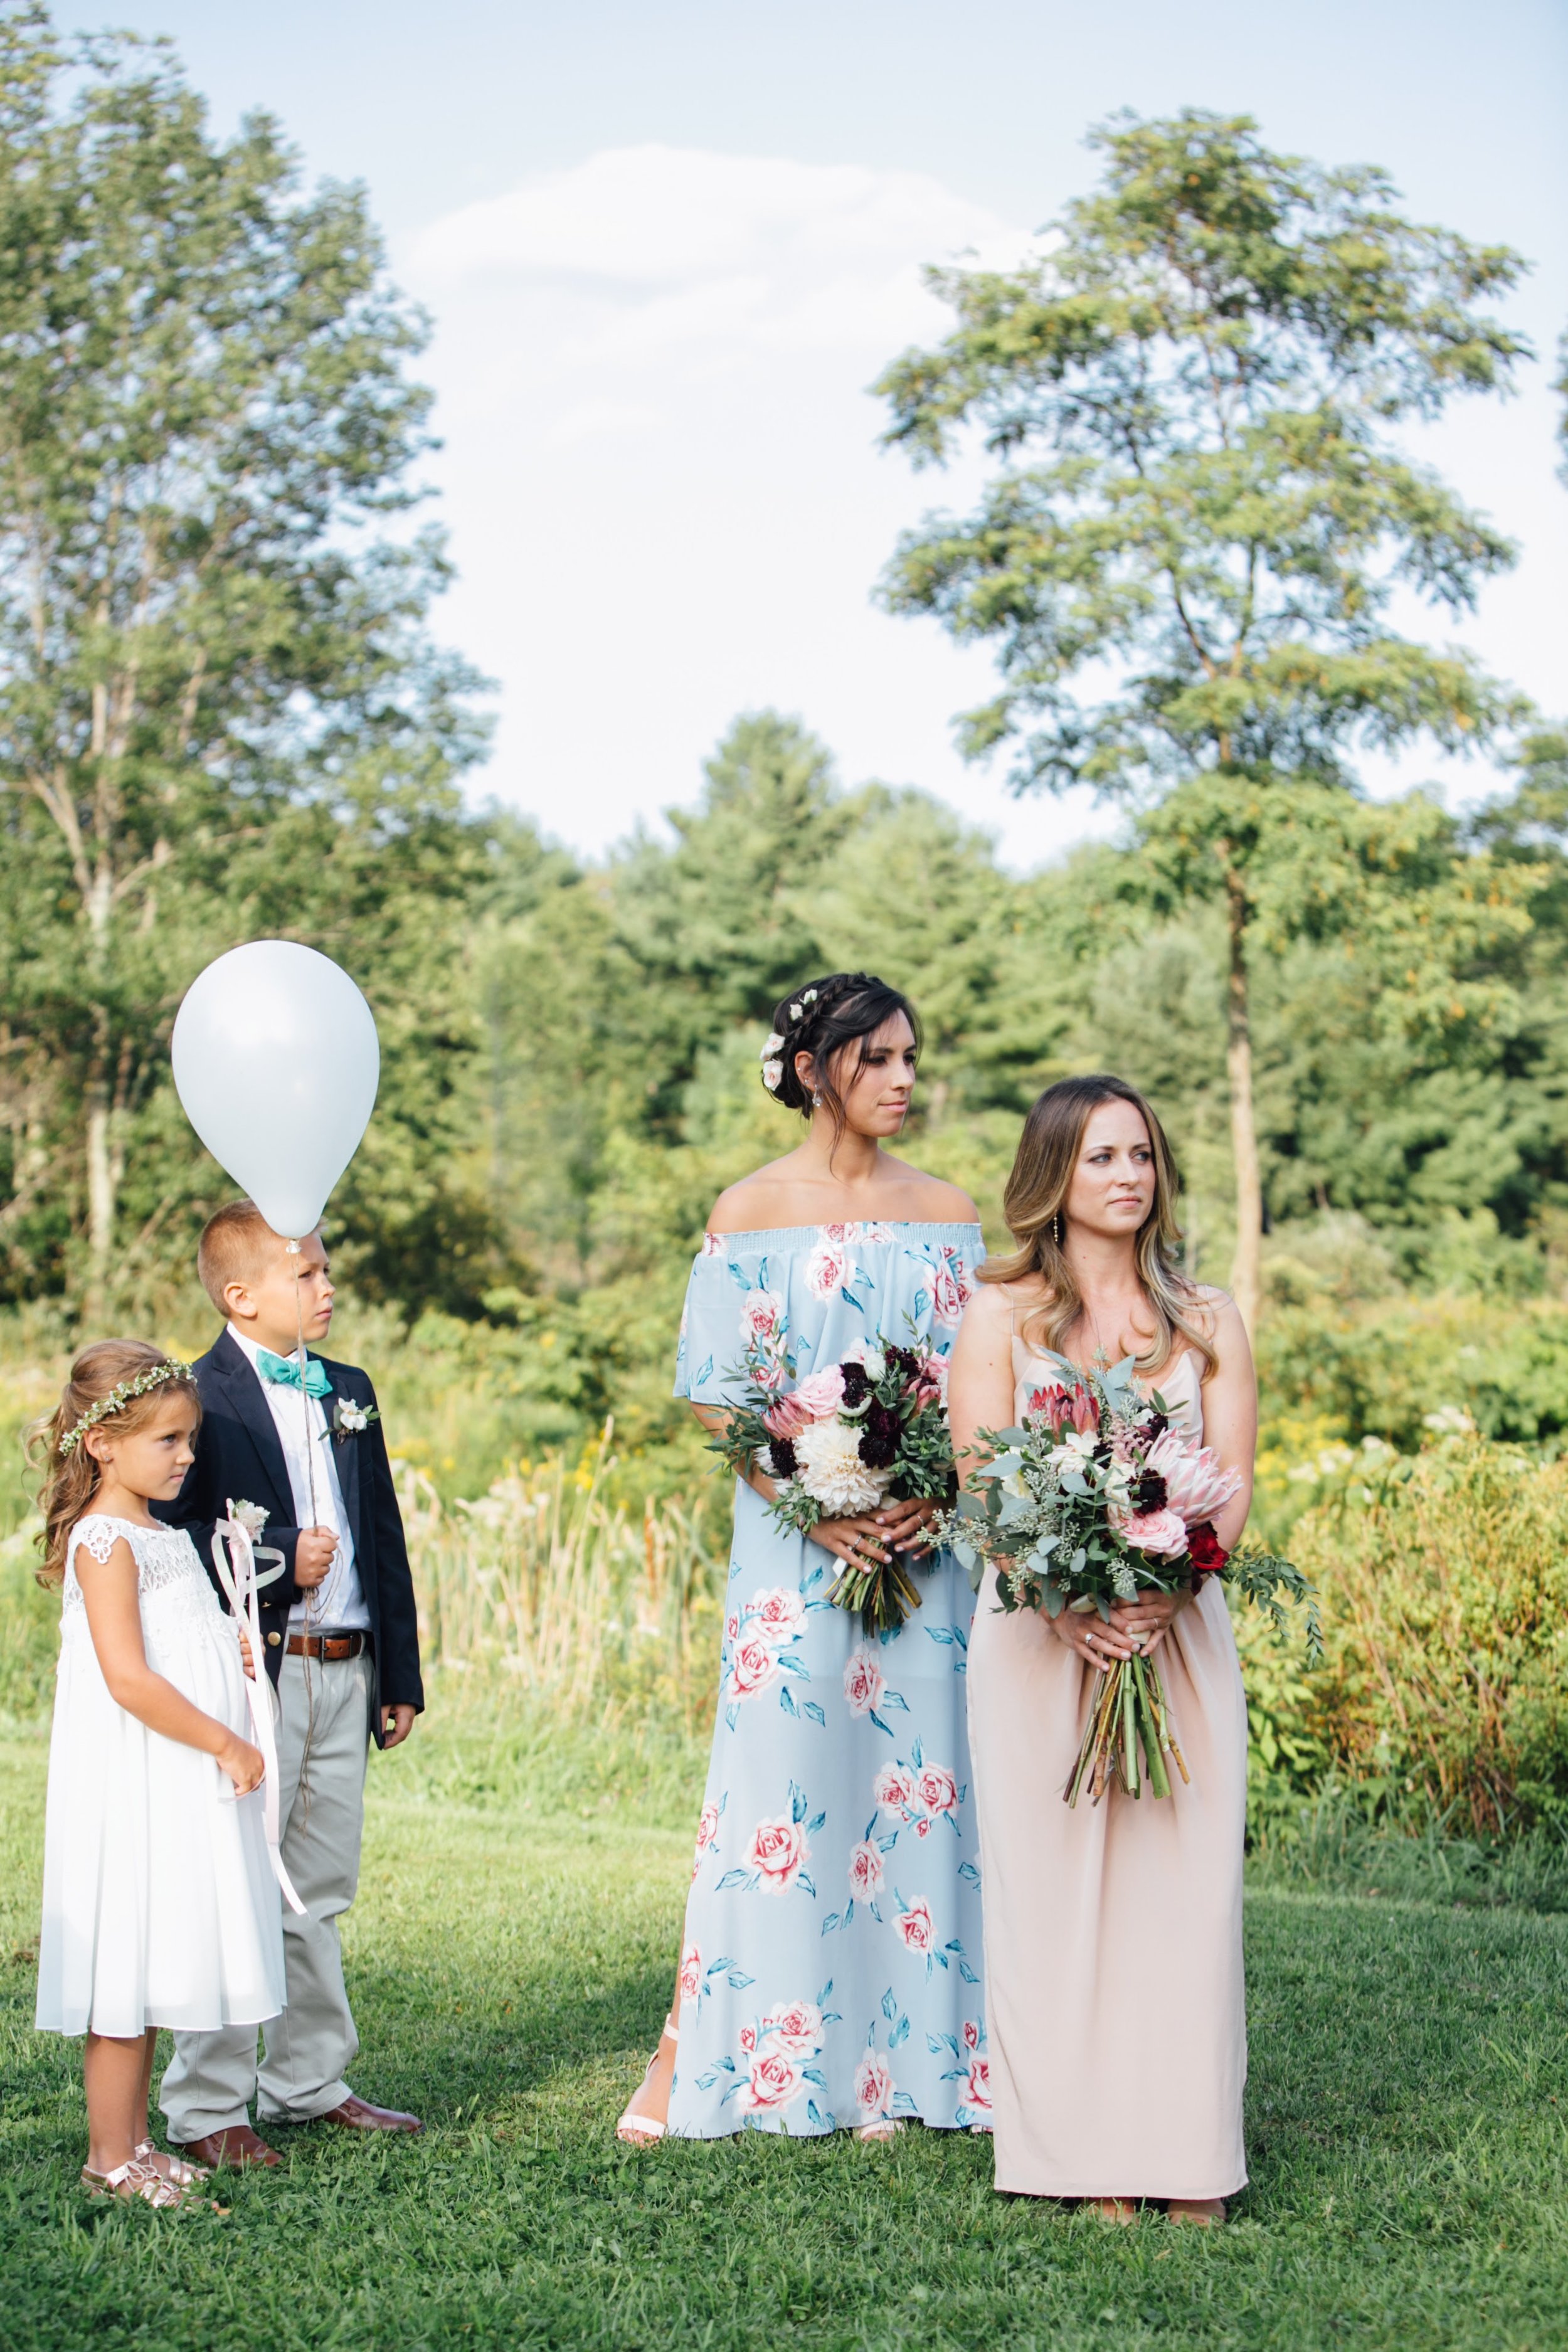 Courtney + Matt Blenheim Hill Farm Catskills NY Wedding Veronica Lola Photography 2017-389.jpg